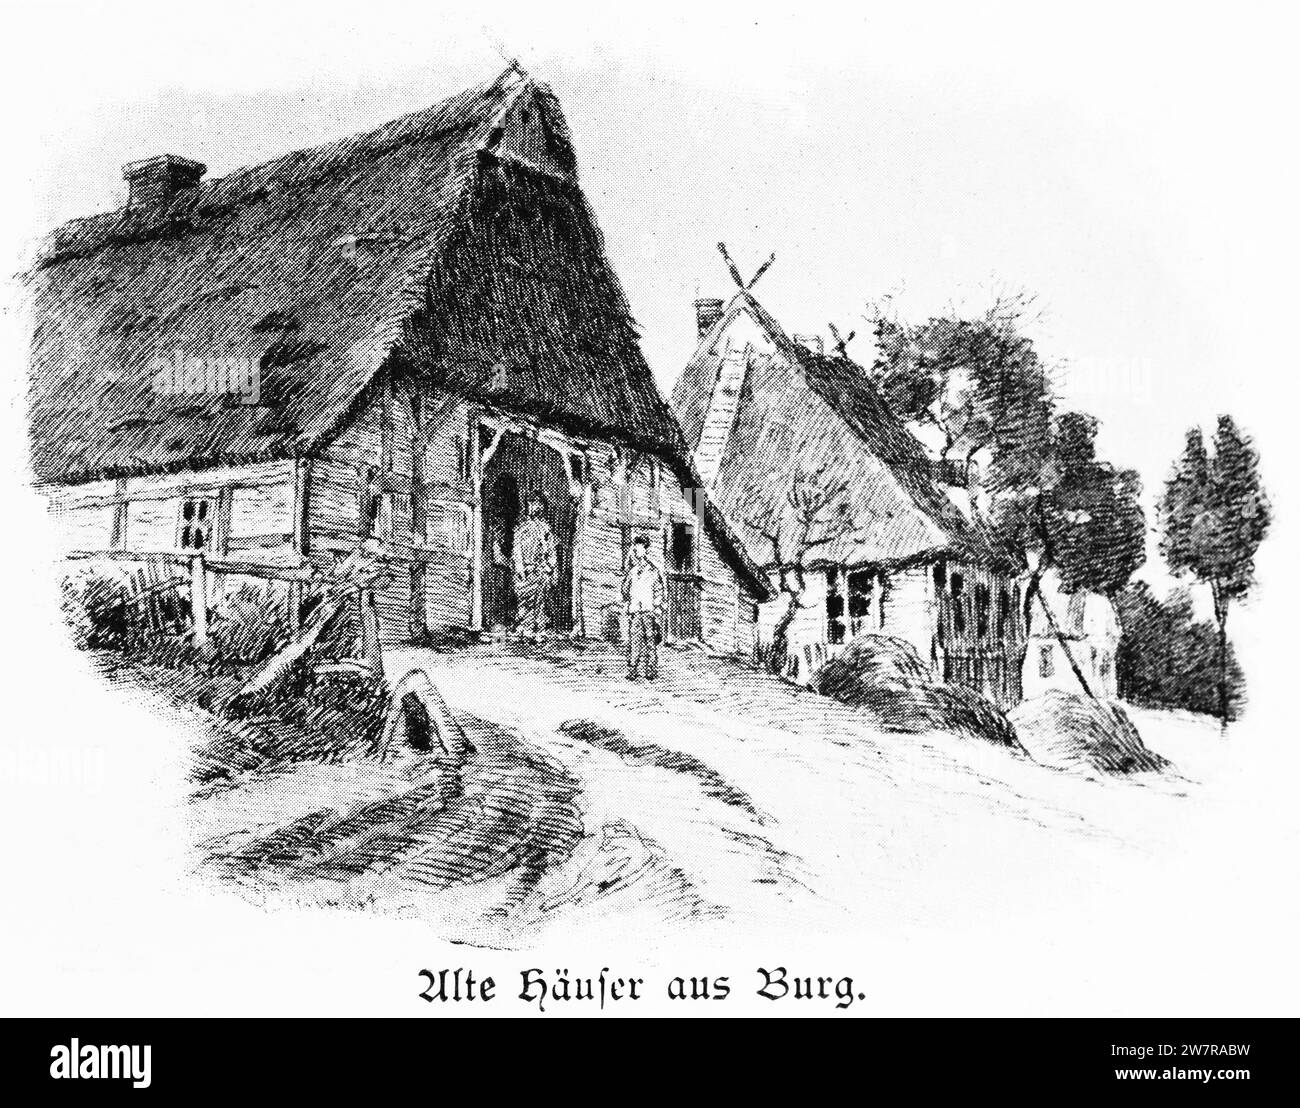 Farm houses in Burg, Dithmarschen, Schleswig-Holstein, Northern Germany, Central Europe, histrorical Illustration 1896 Stock Photo